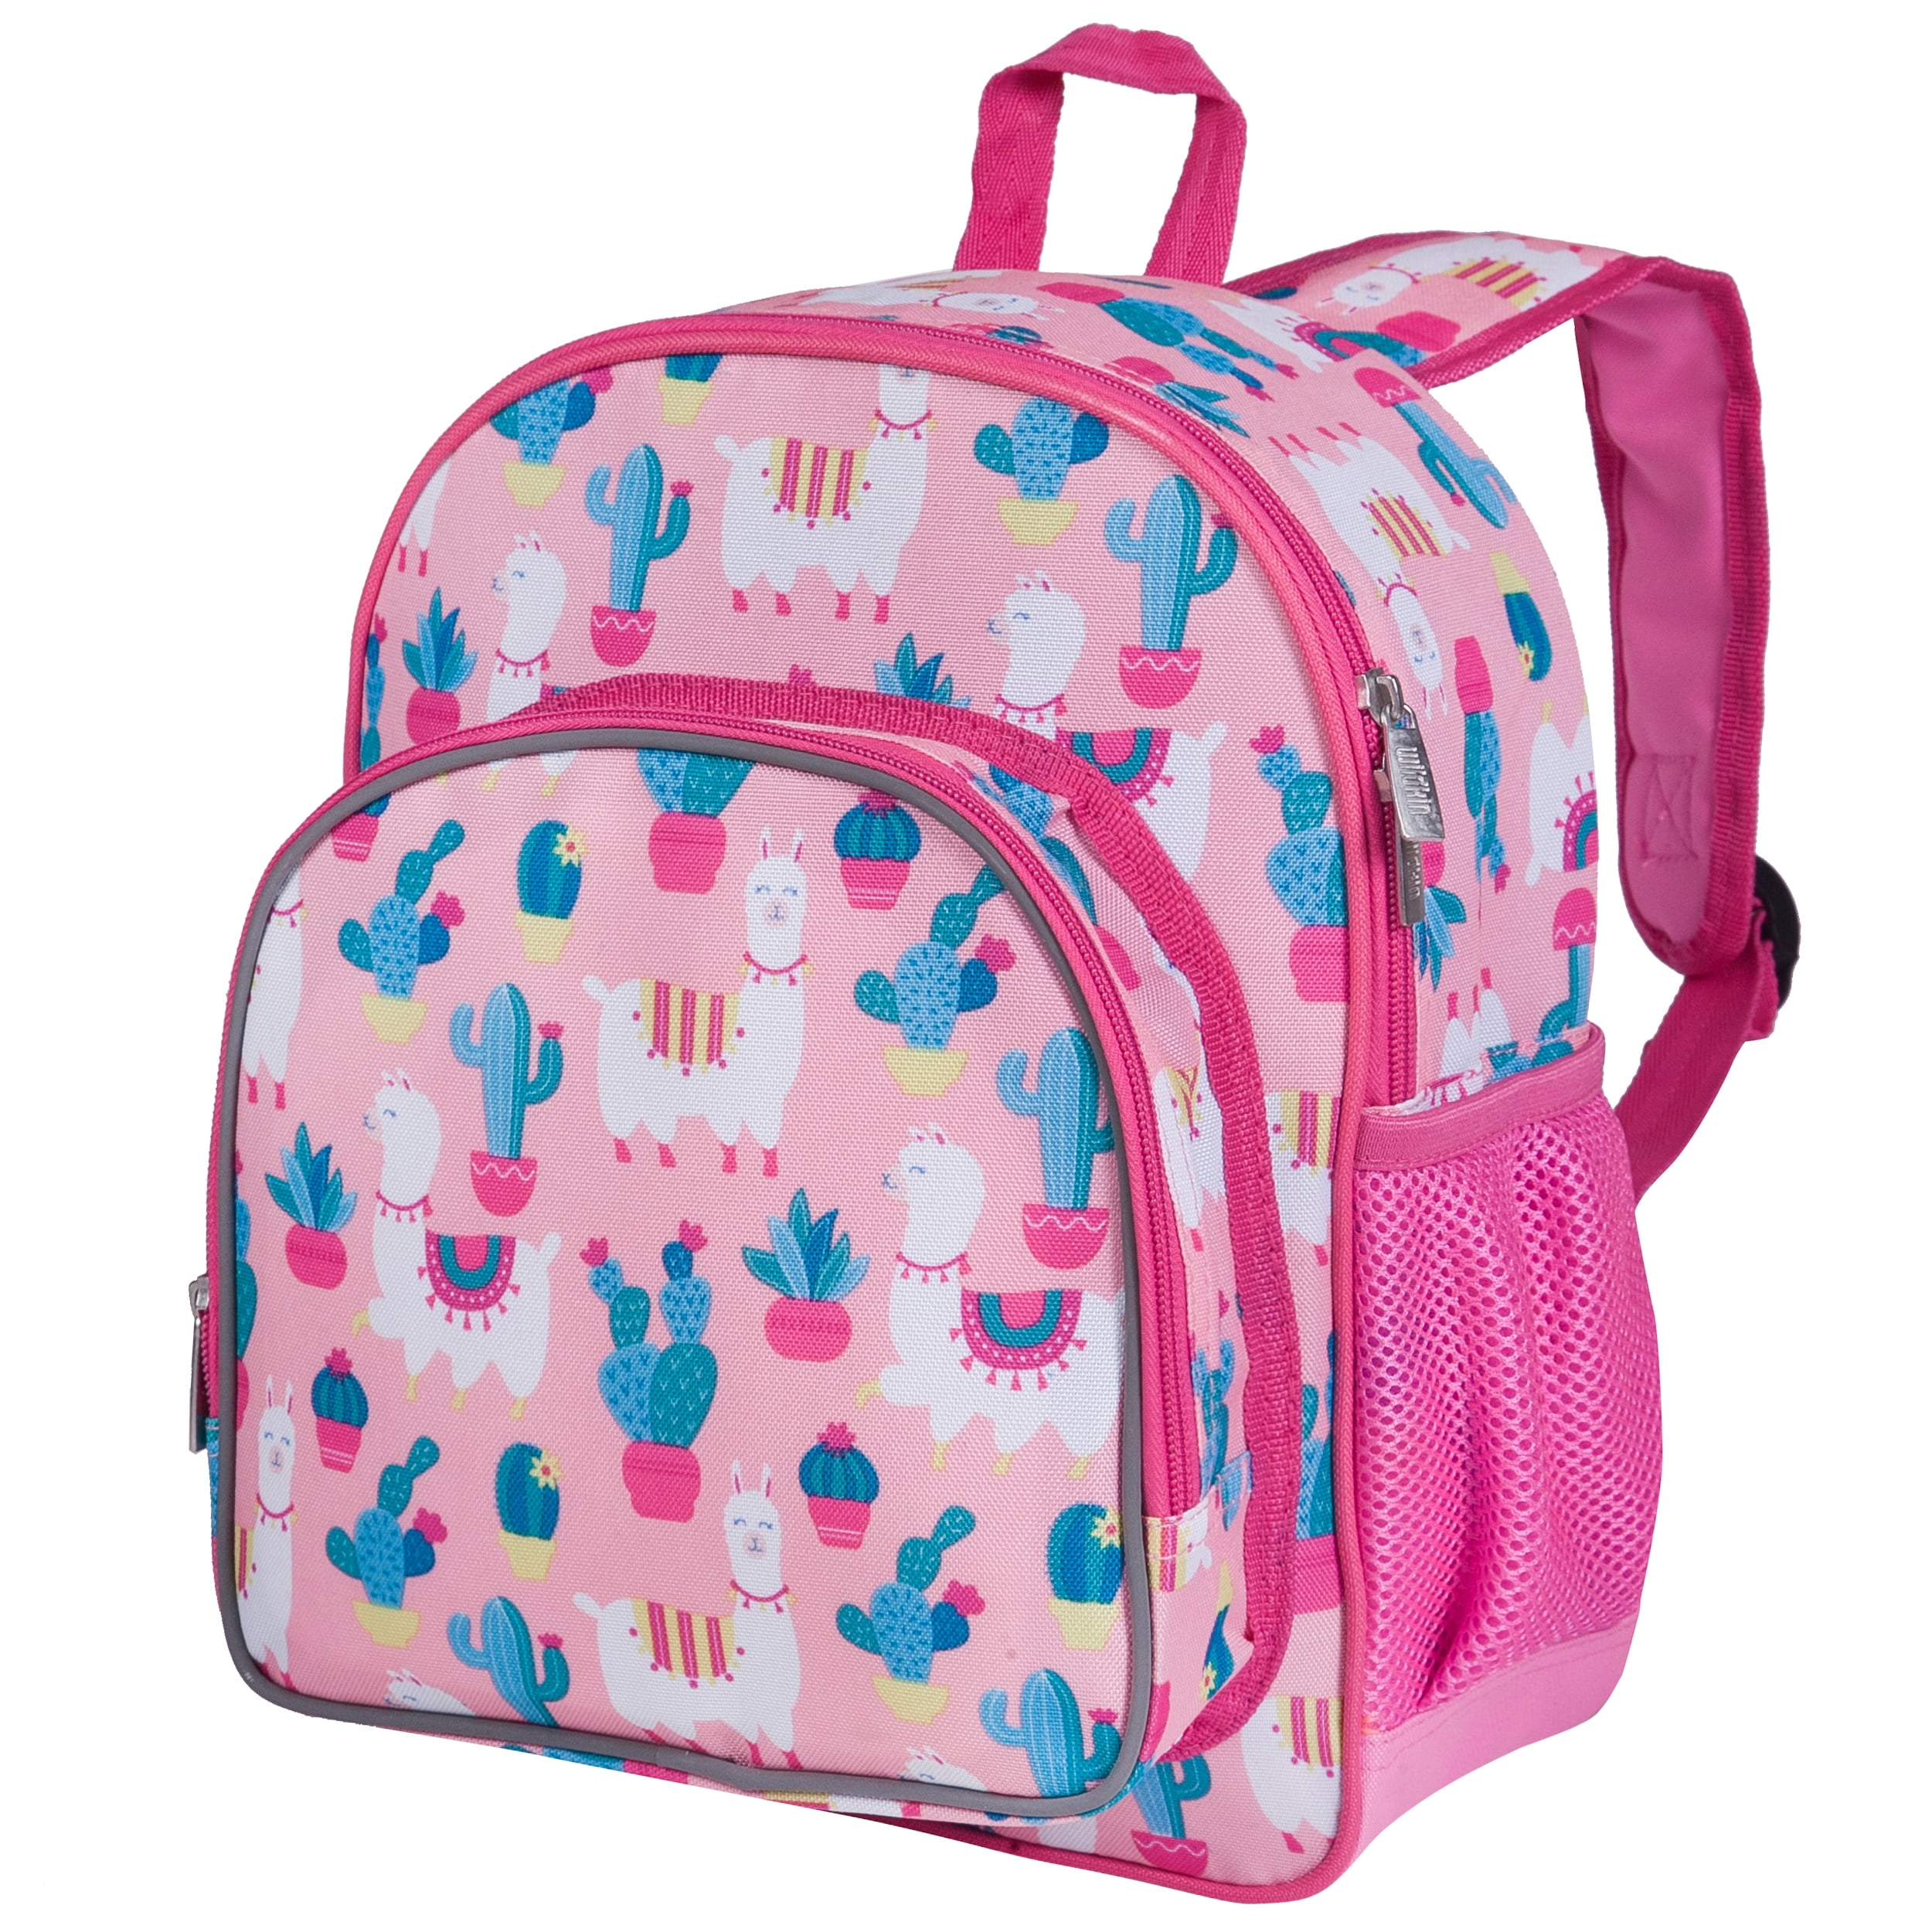  Wildkin 12-Inch Kids Backpack for Boys & Girls